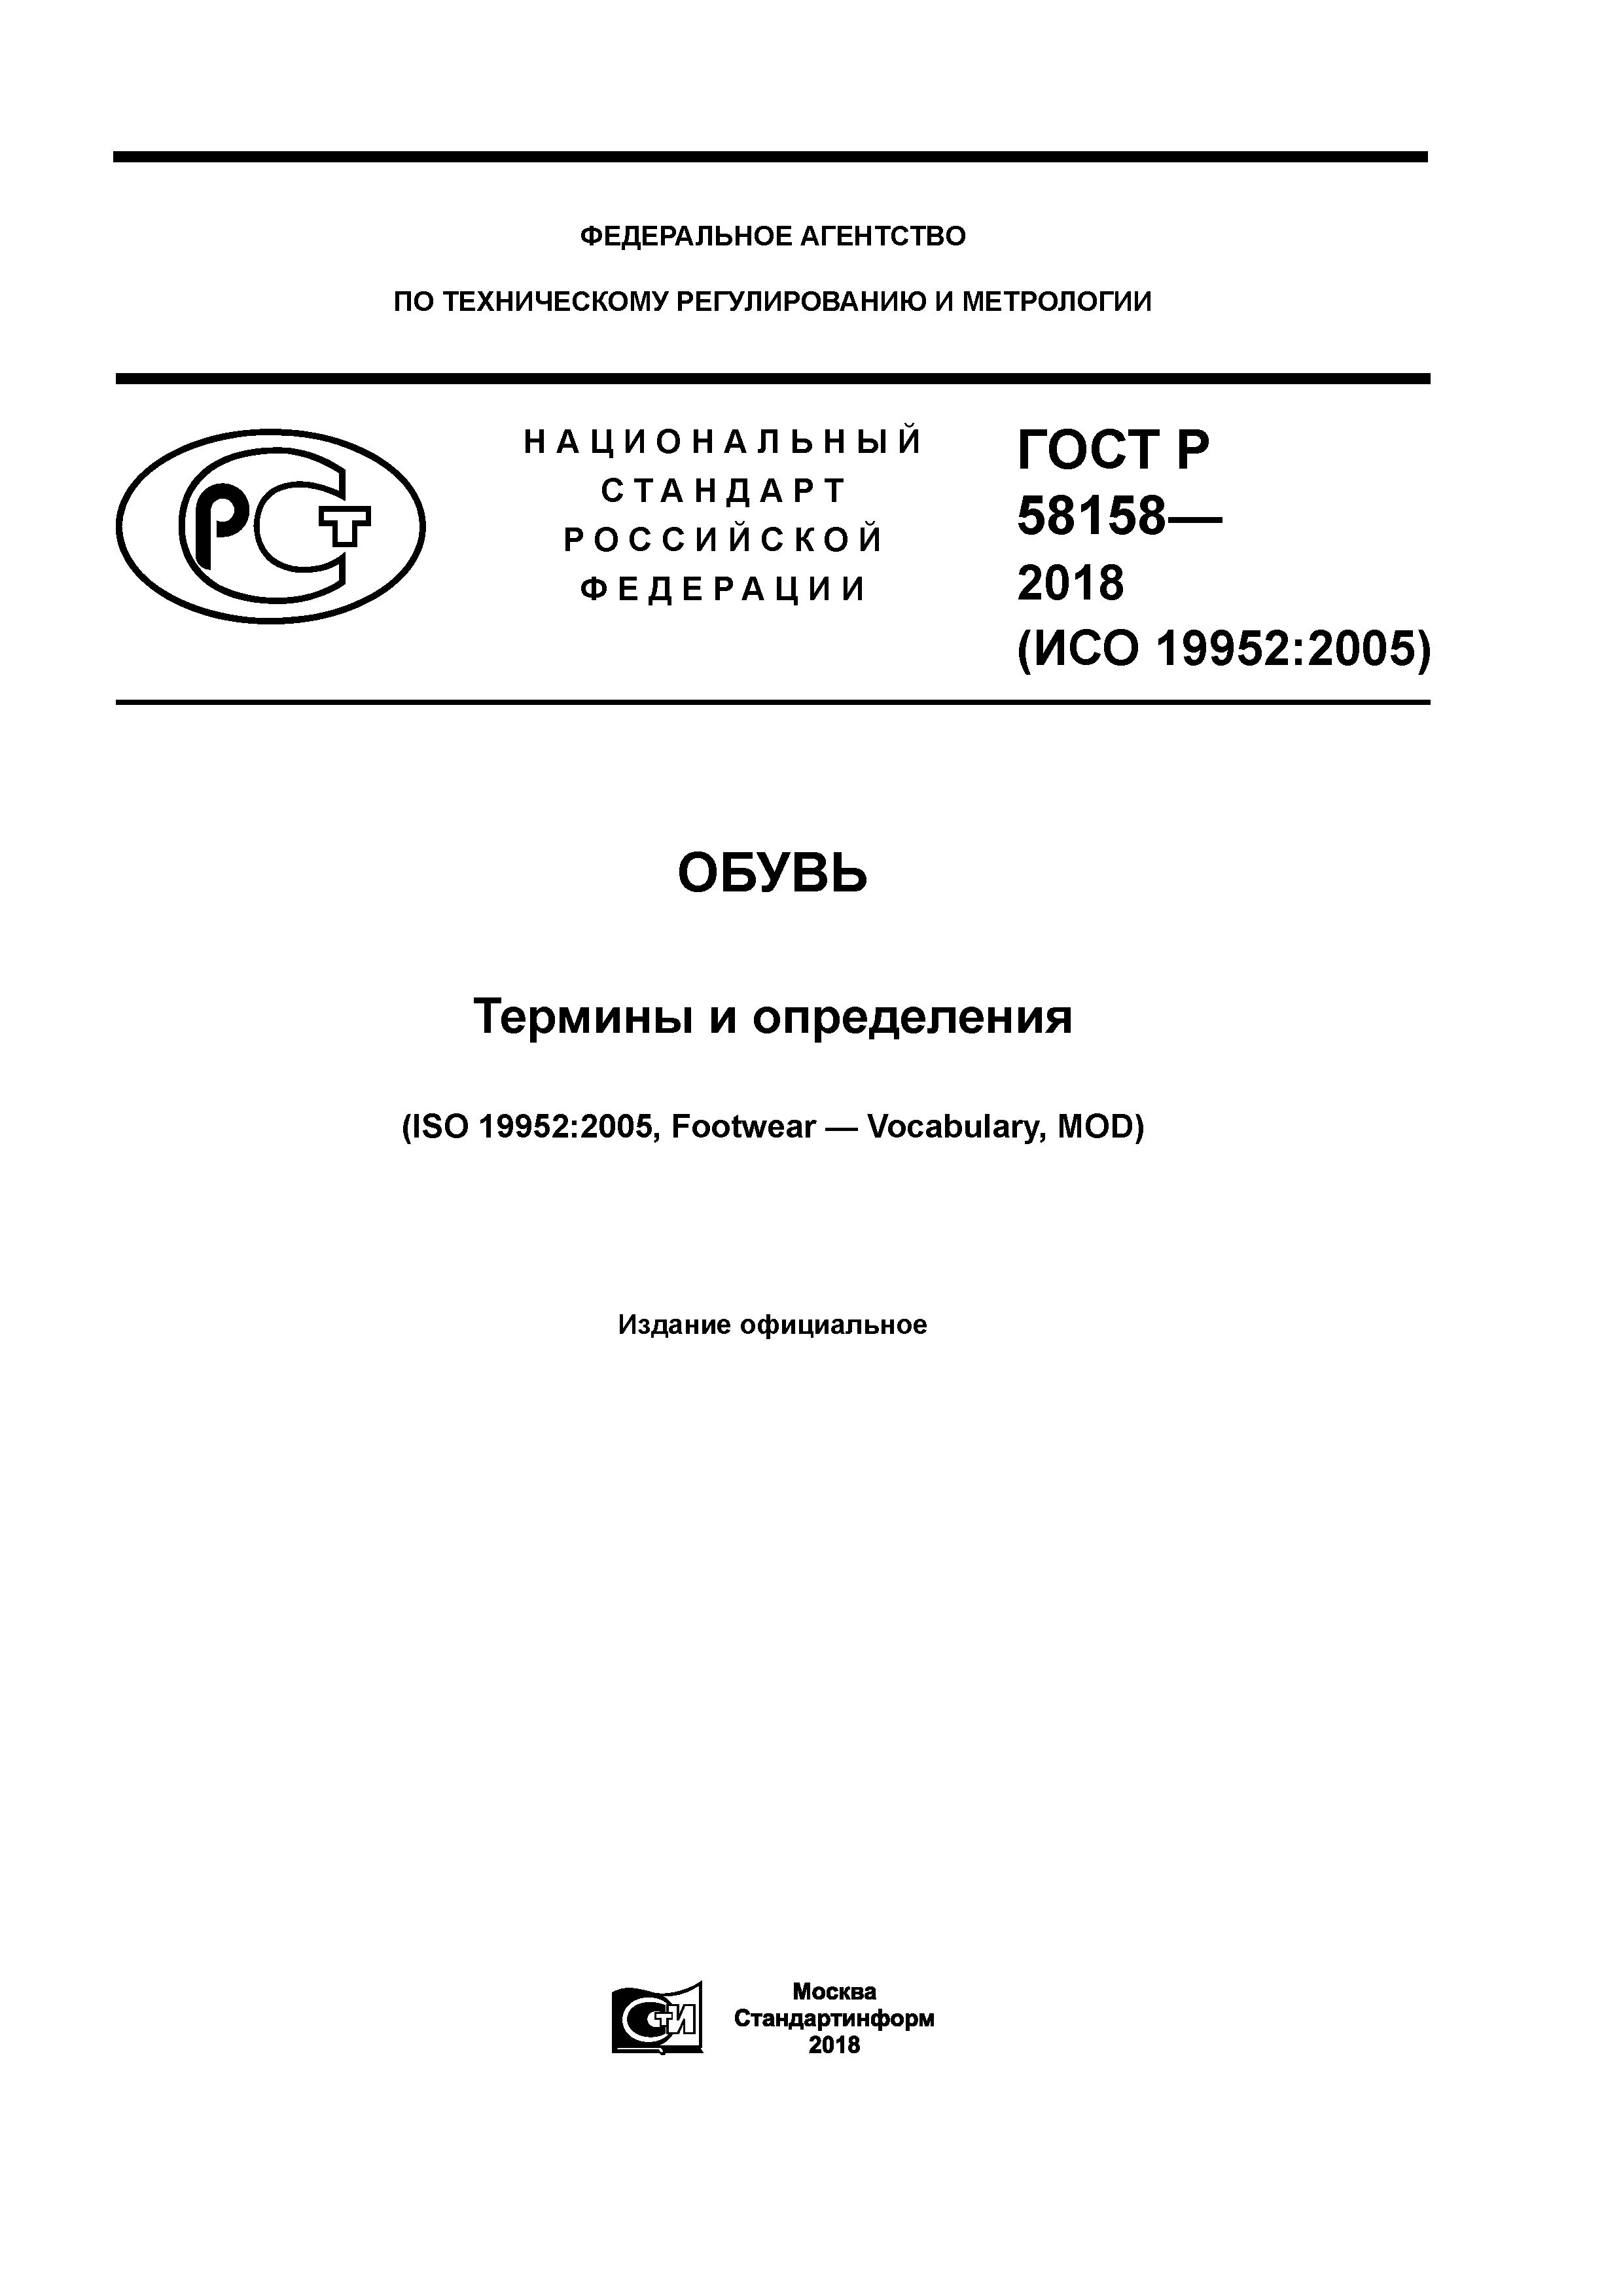 ГОСТ Р 58158-2018